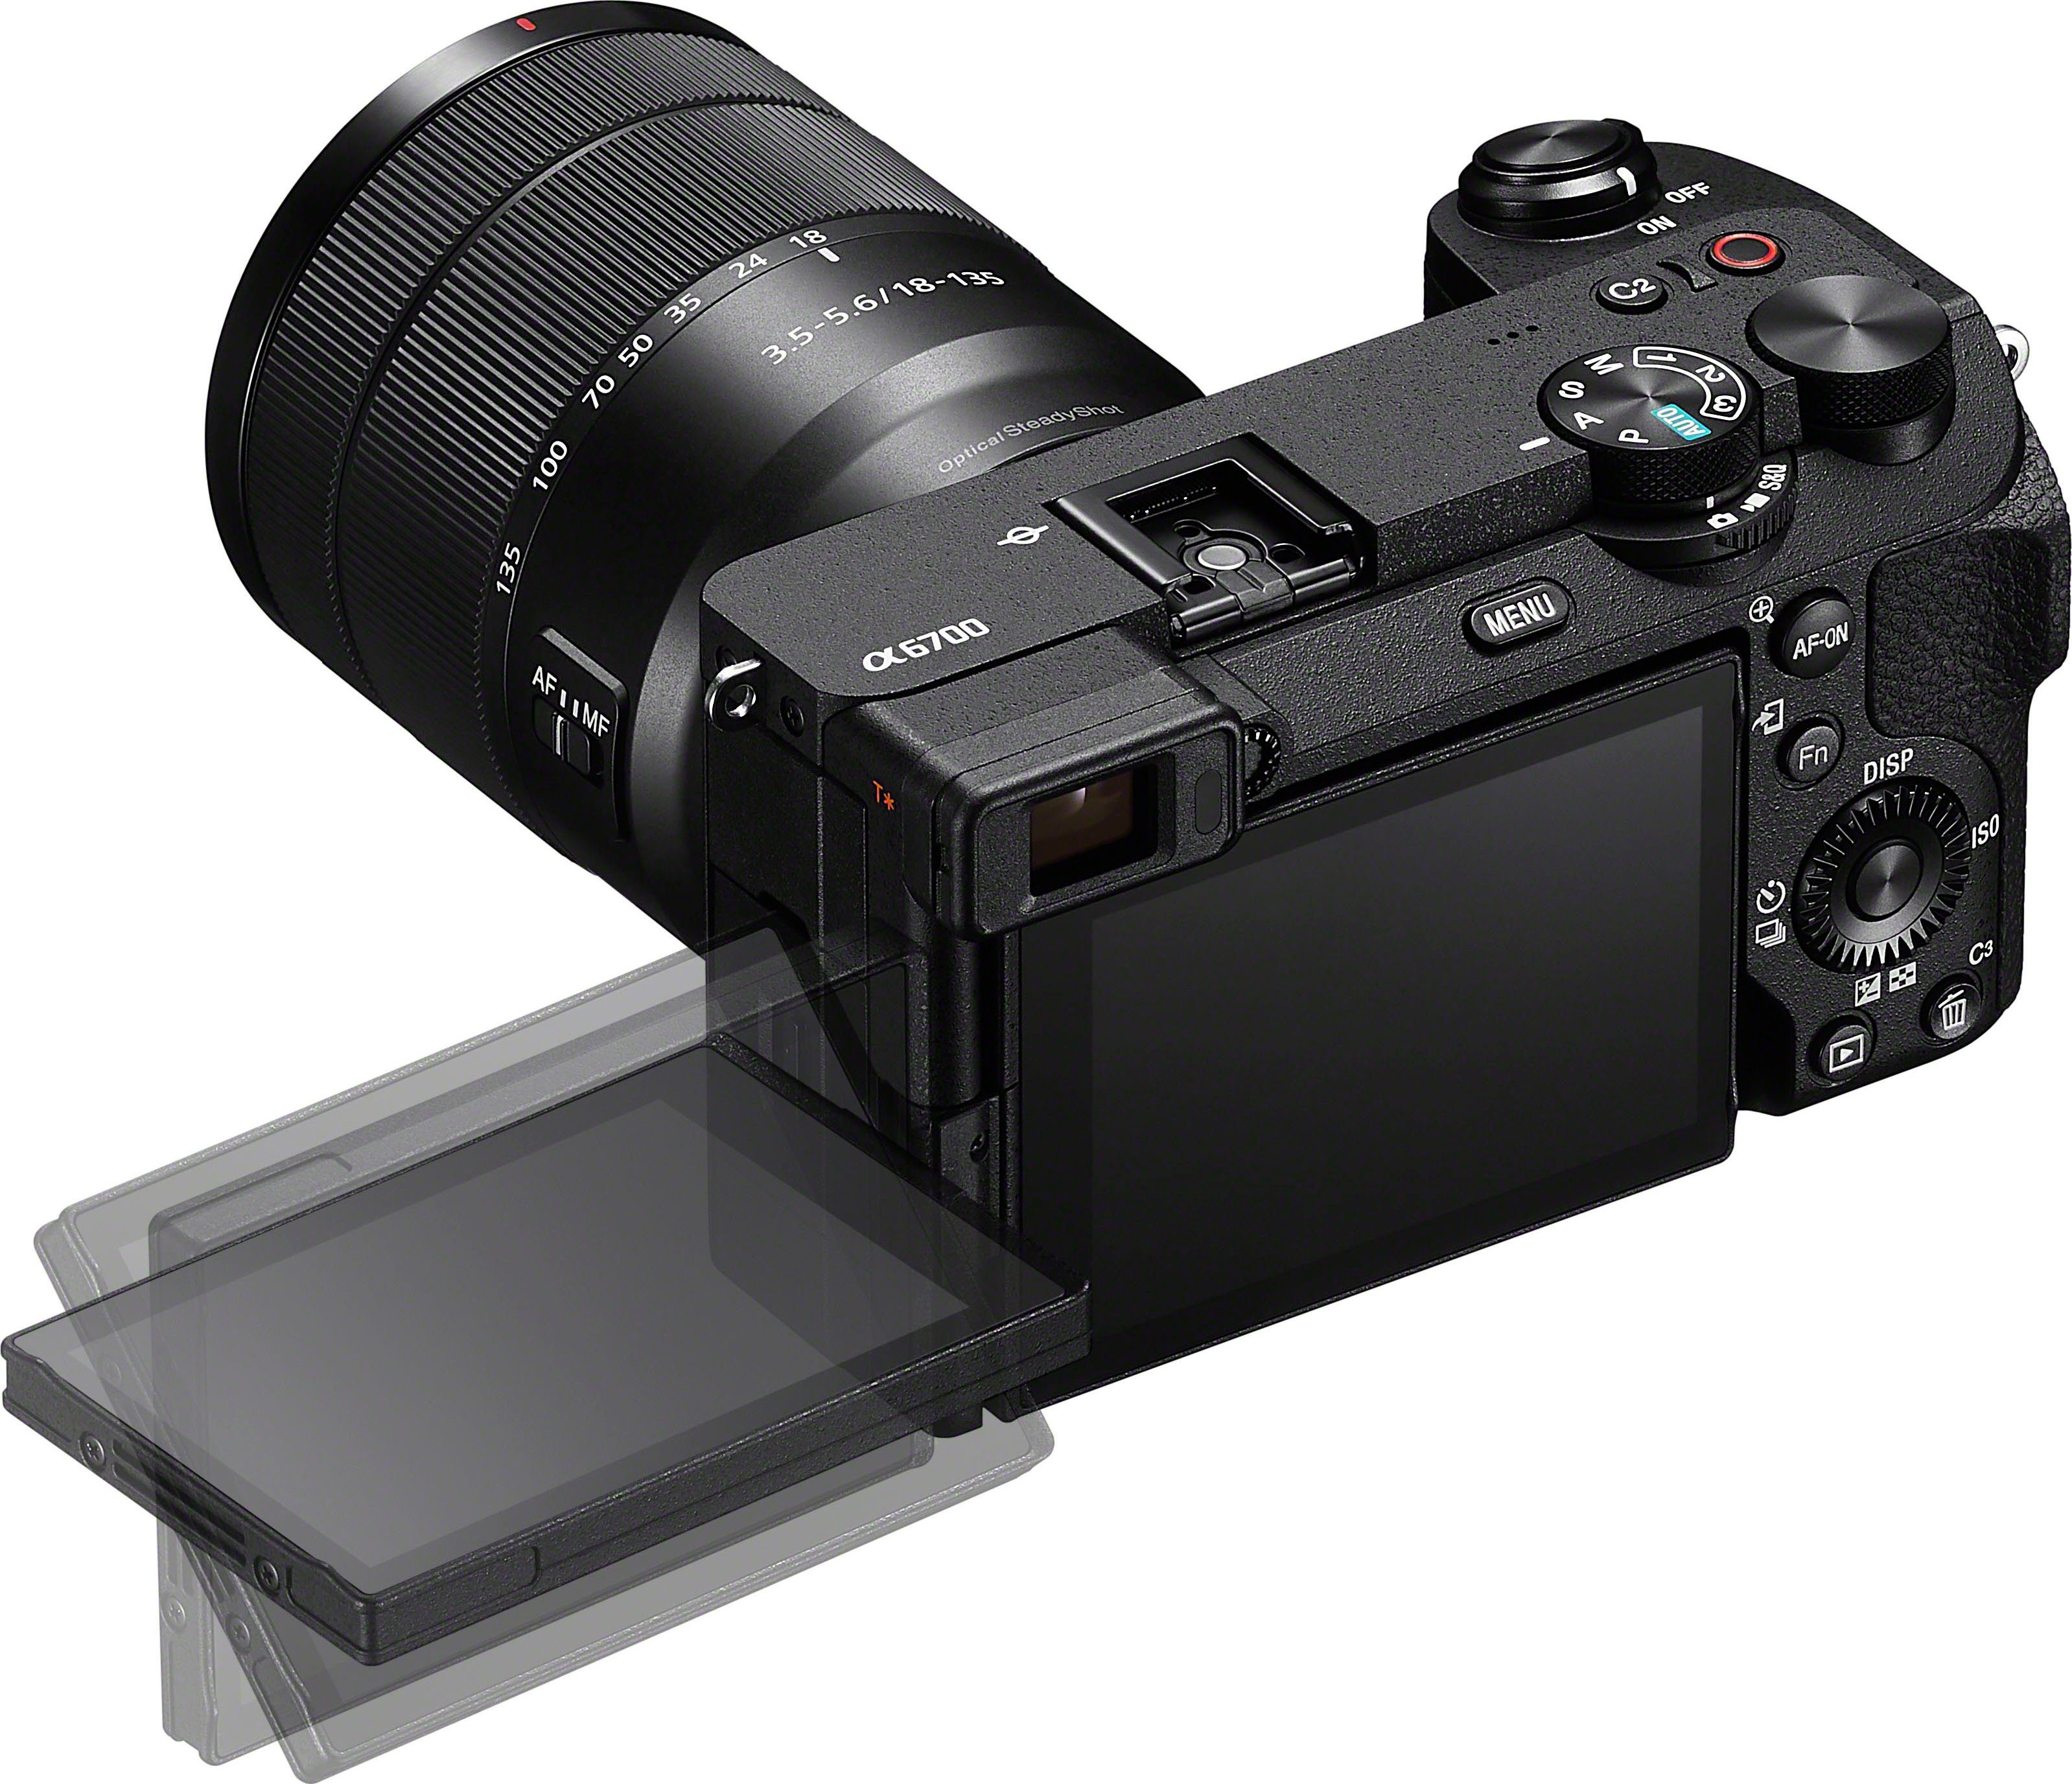 Sony Alpha ILCE-6700 26 SEL-18135, Bluetooth, (18–135-mm WLAN) MP, 18–135-mm-Objektiv + Systemkamera